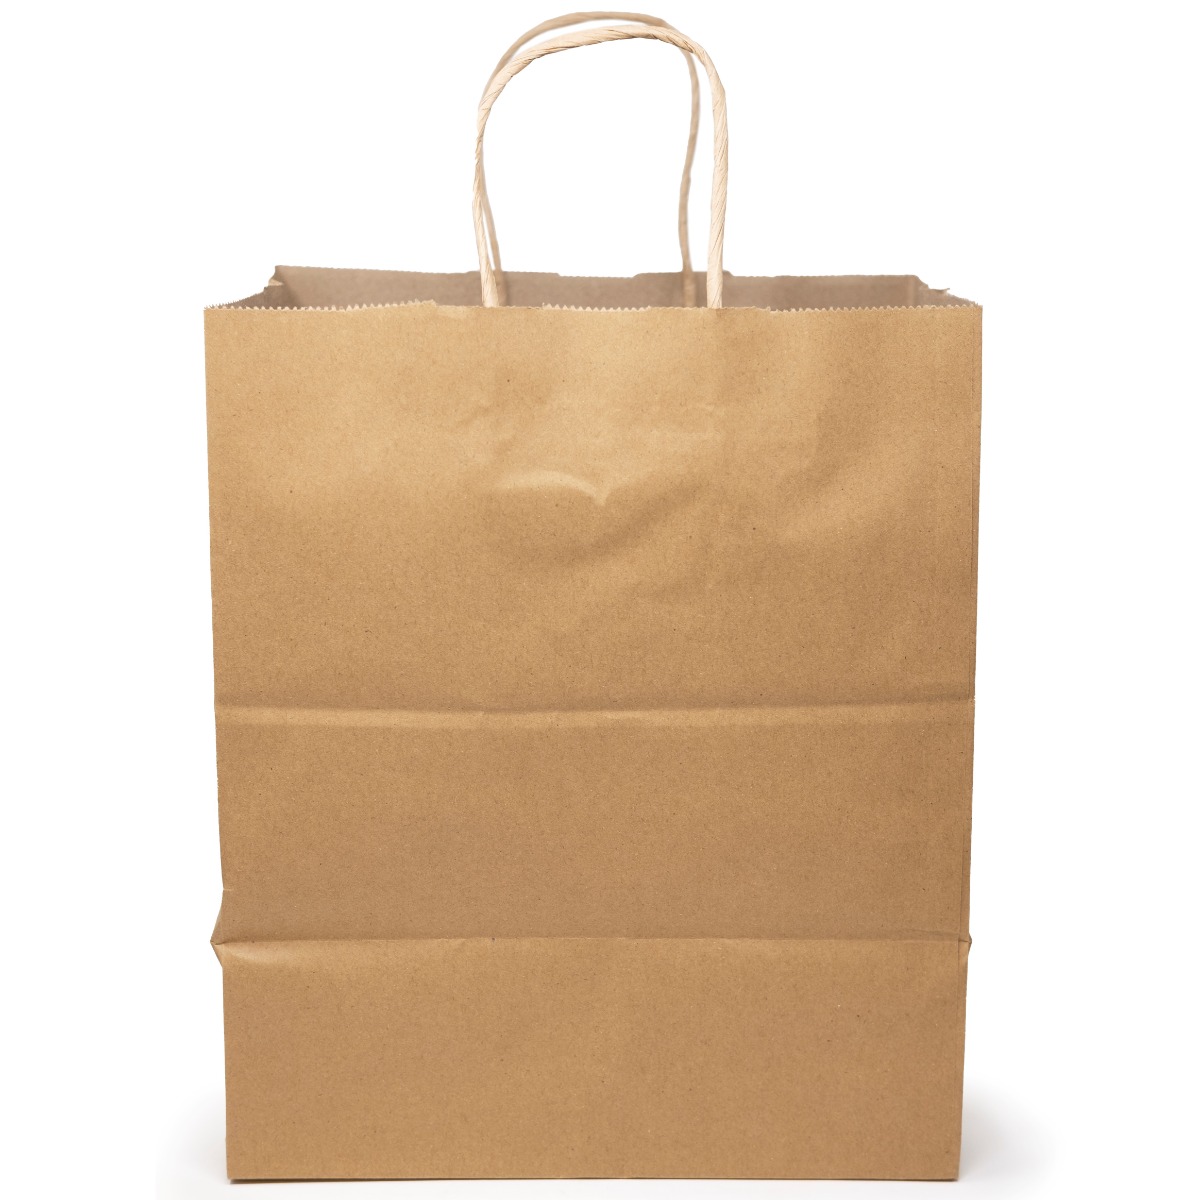 Bag Tek 2 gal Clear Plastic Zip Bag - Double Zipper, Write-On Label